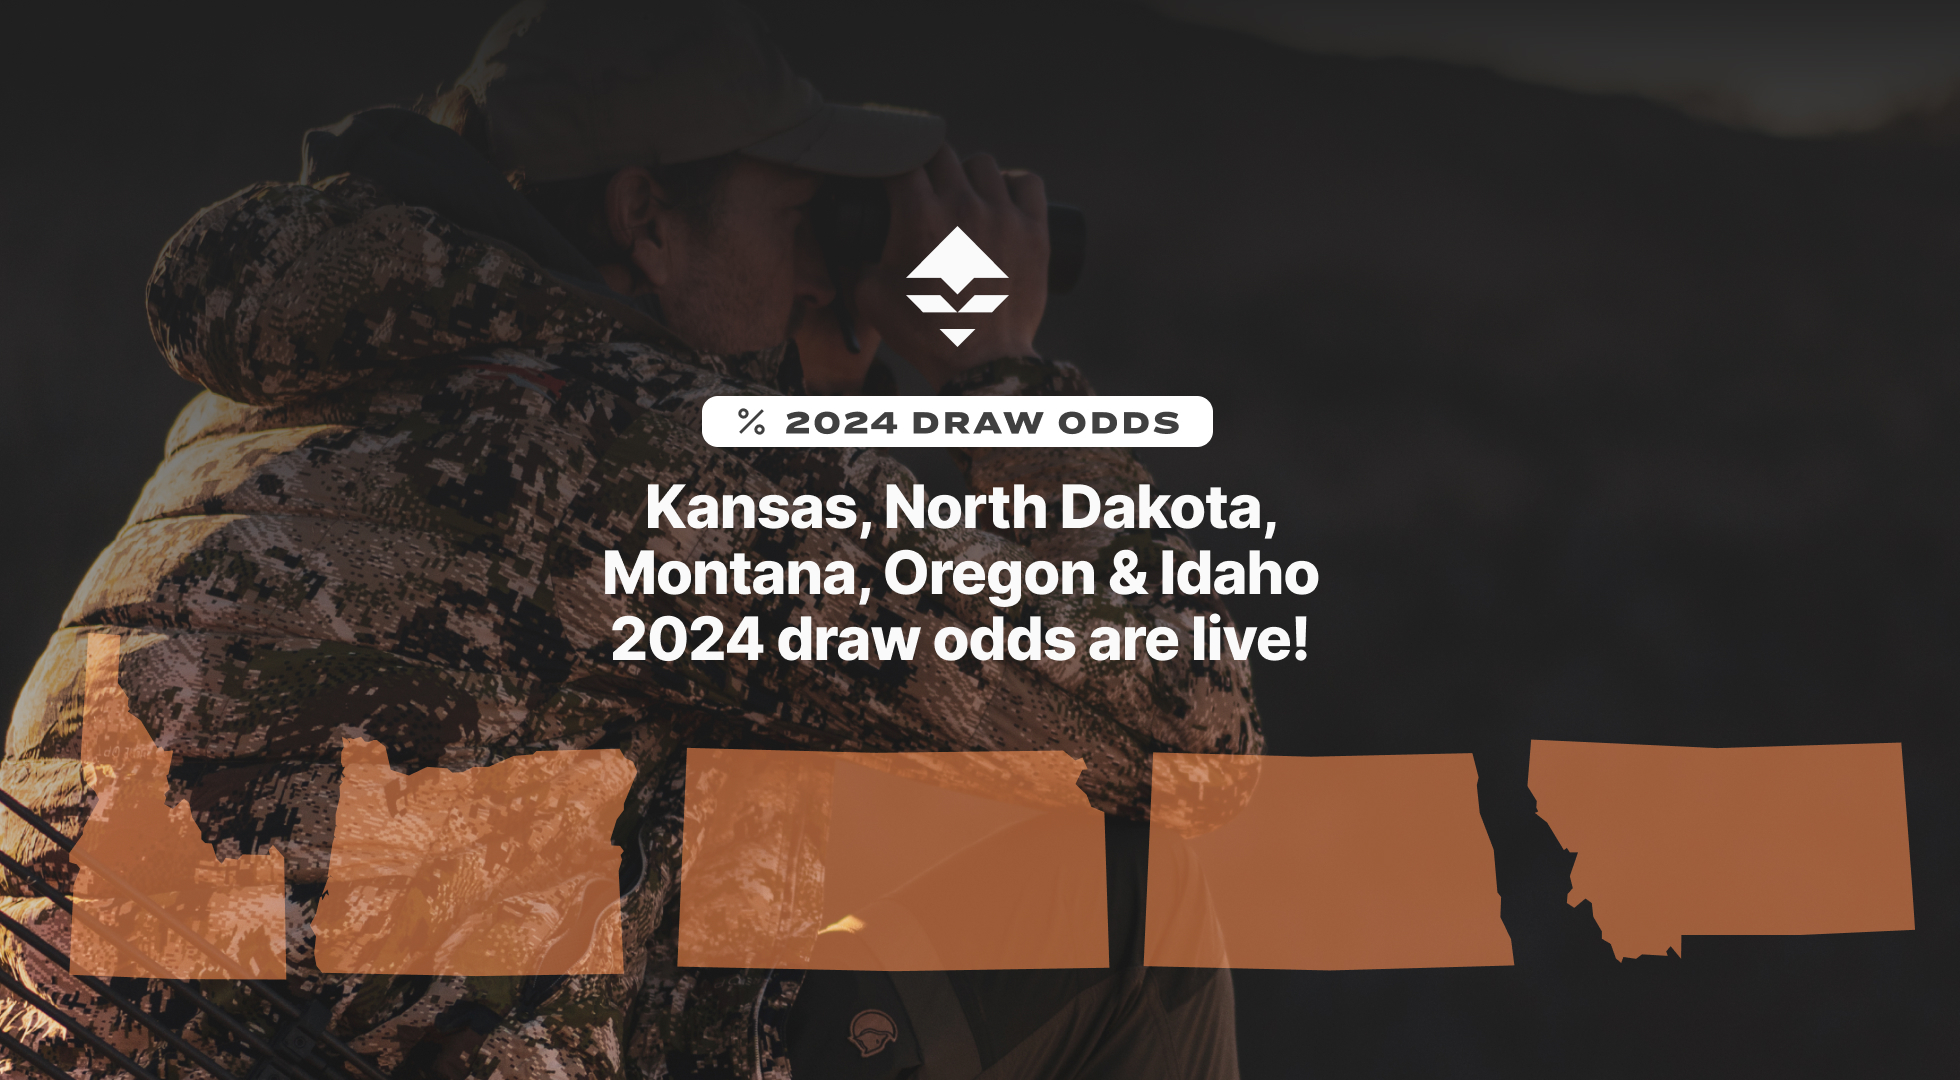 Draw odds recently updated for Kansas, North Dakota, Montana, Oregon